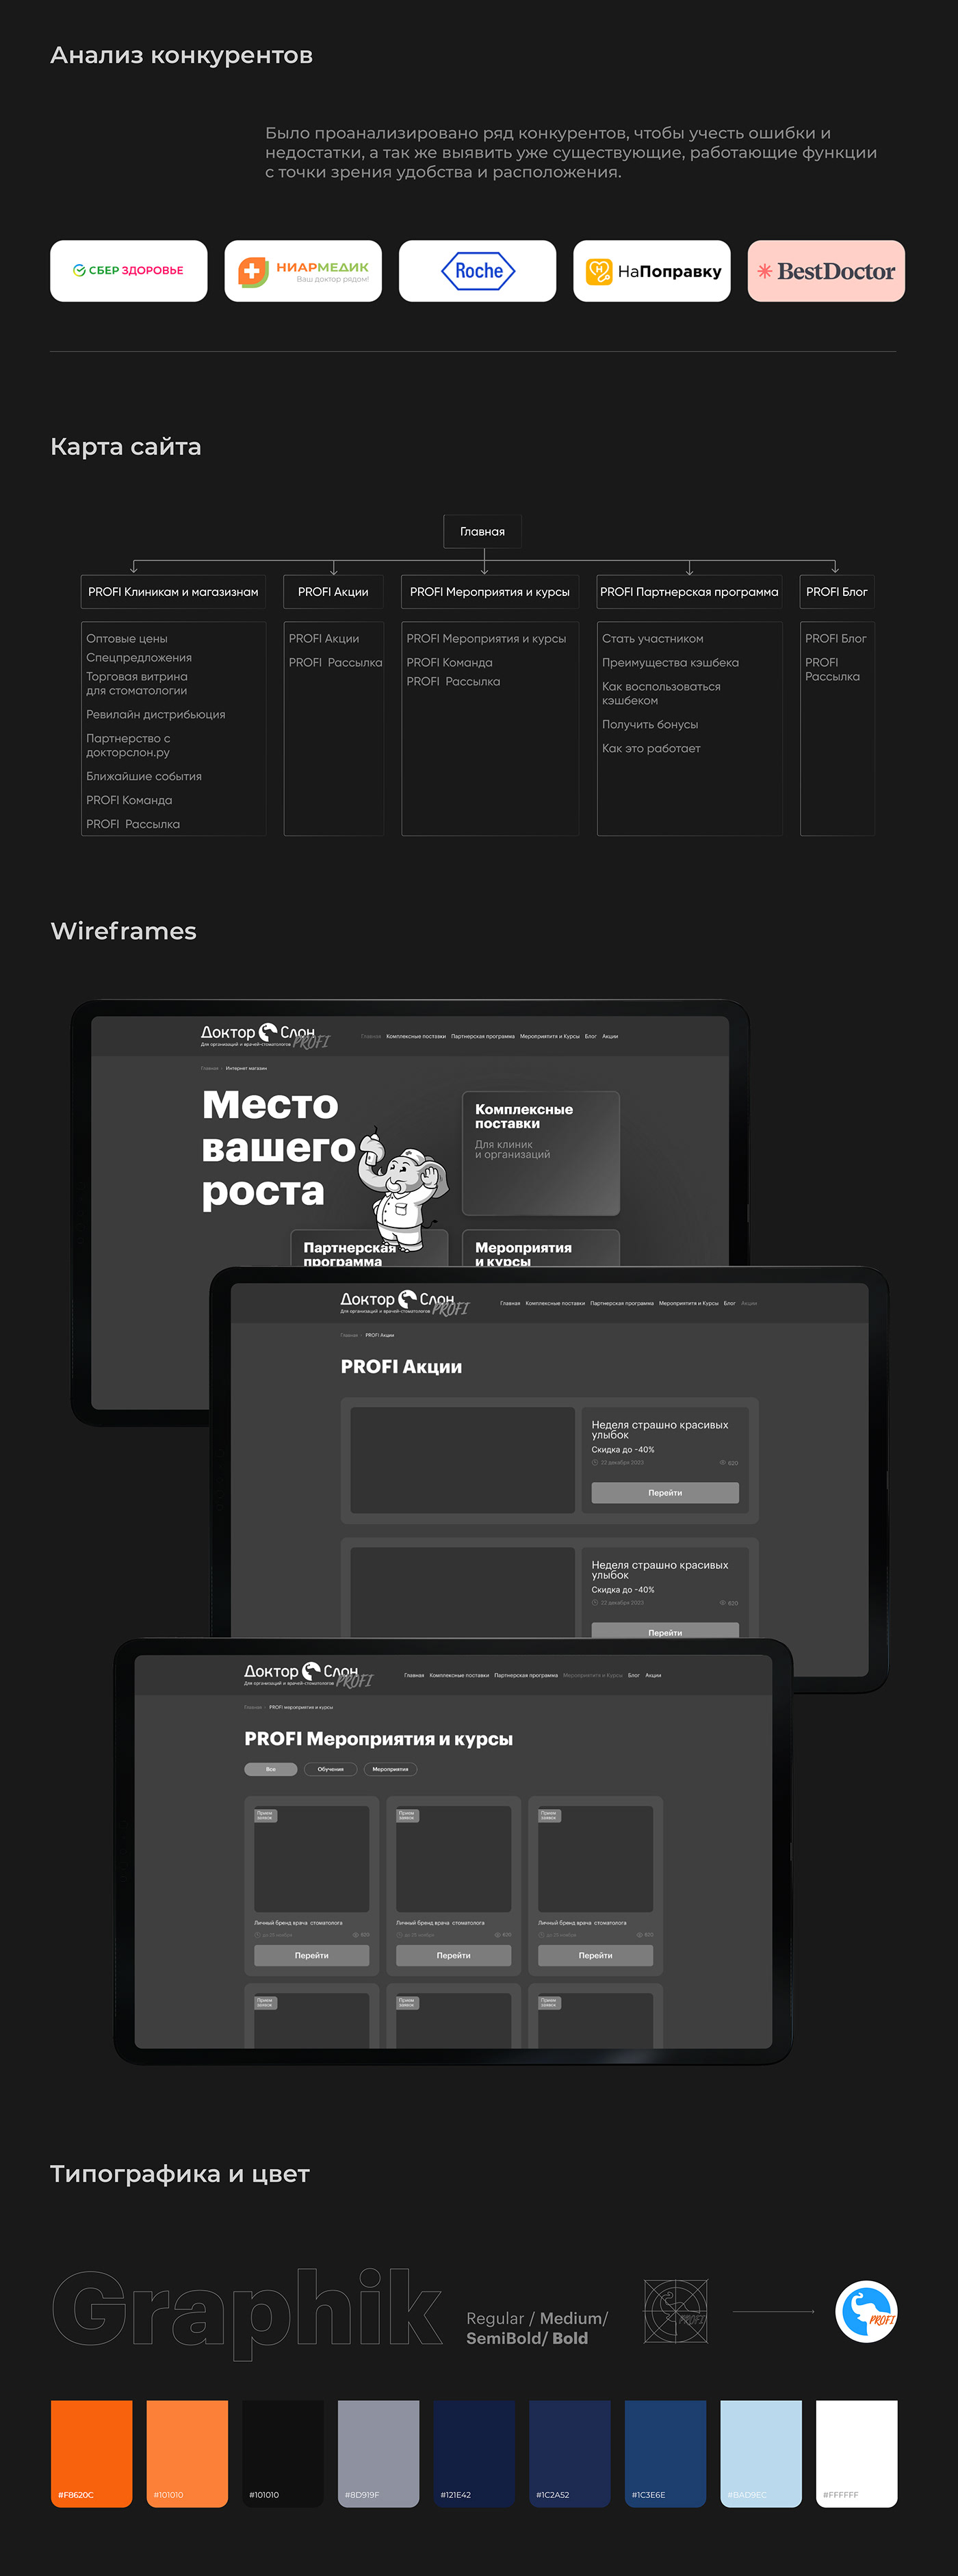 Web Design  ux/ui user interface e-commerce online store Website shoponline redesign discount Marketplace